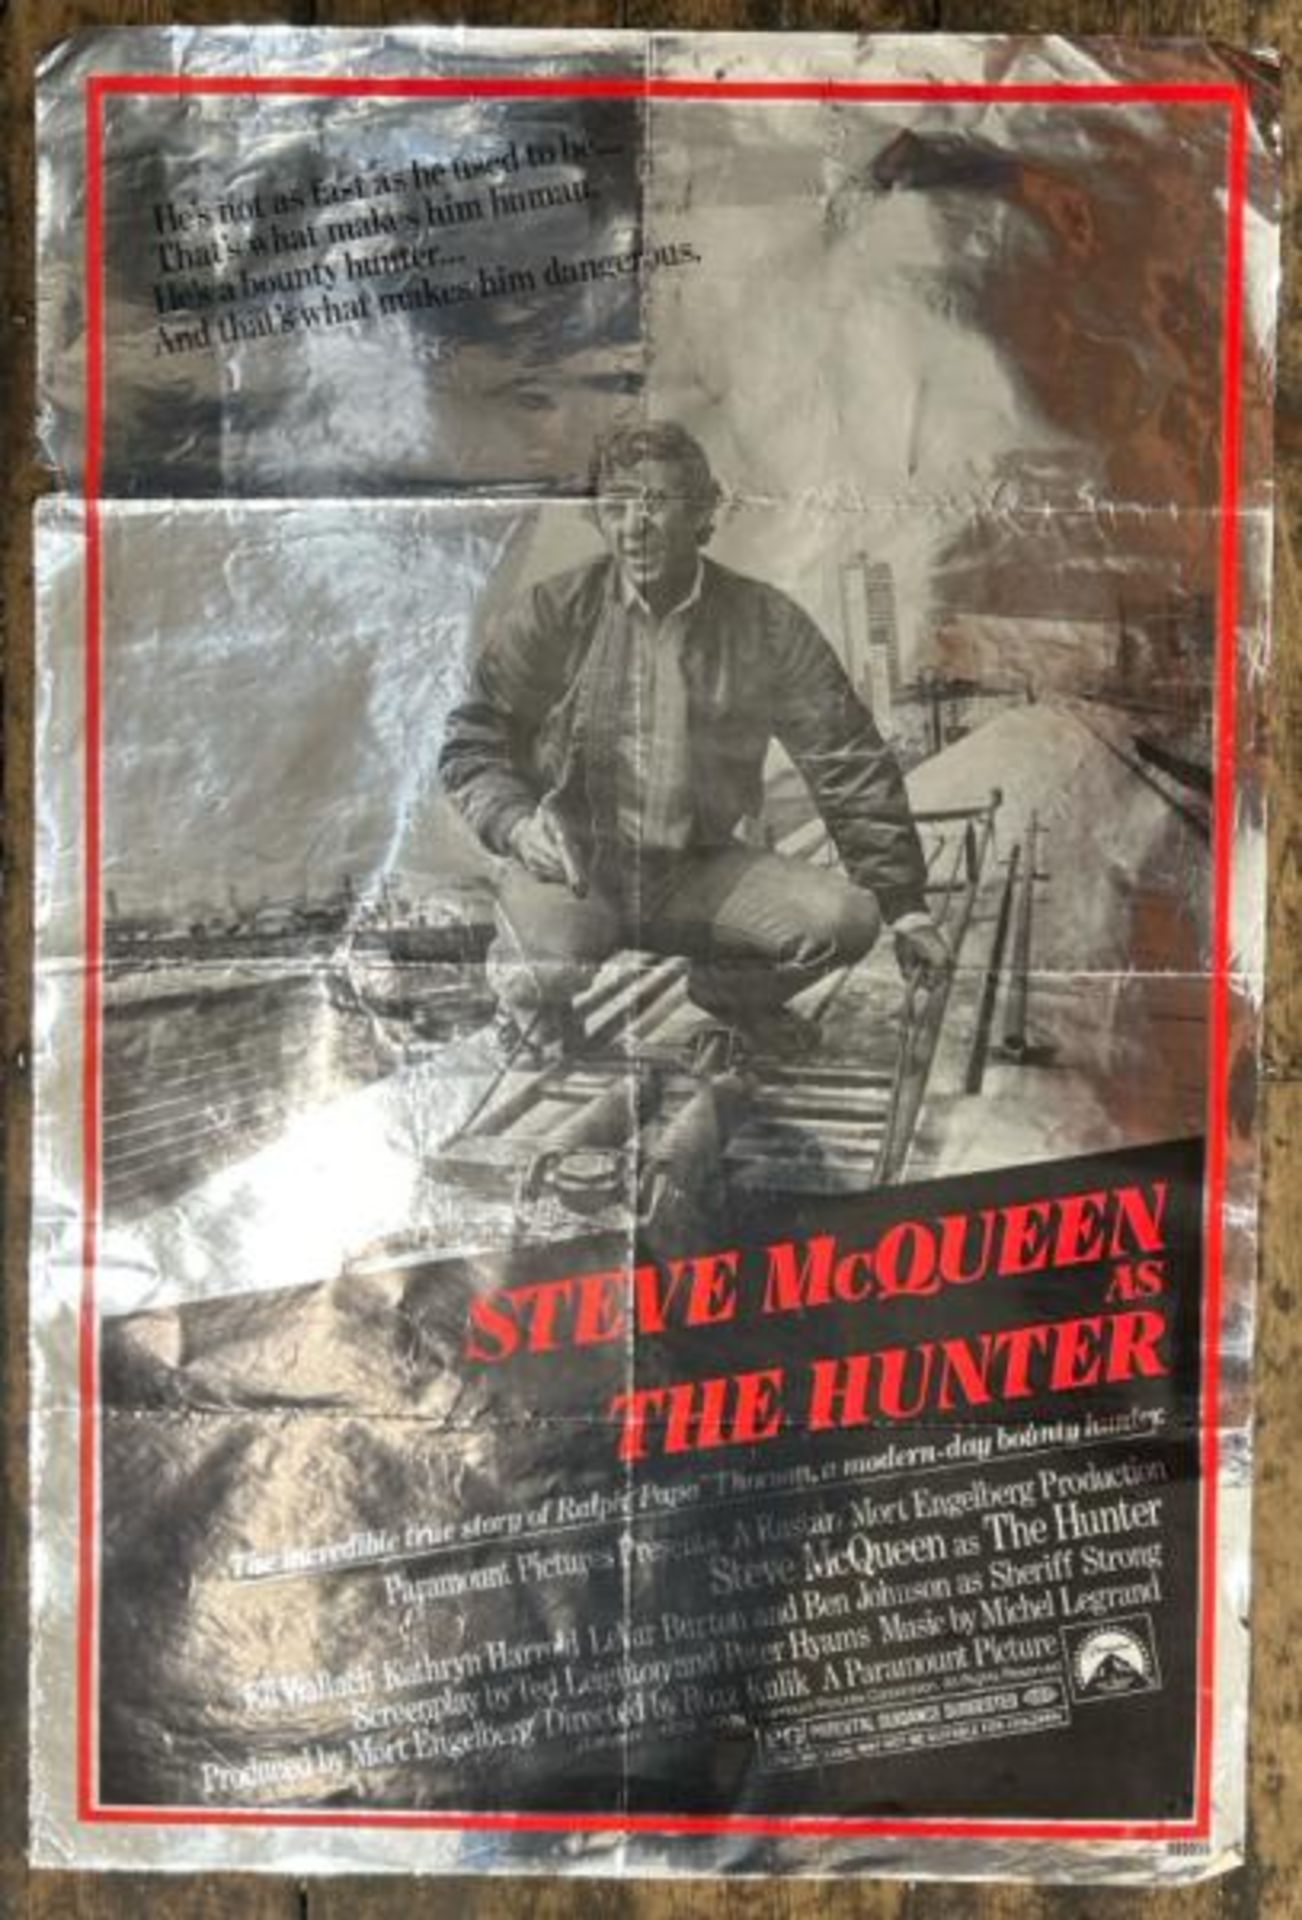 THE HUNTER STARRING STEVE MQUEEN, ORIGINAL FILM POSTER, 68CM W X 102CM H